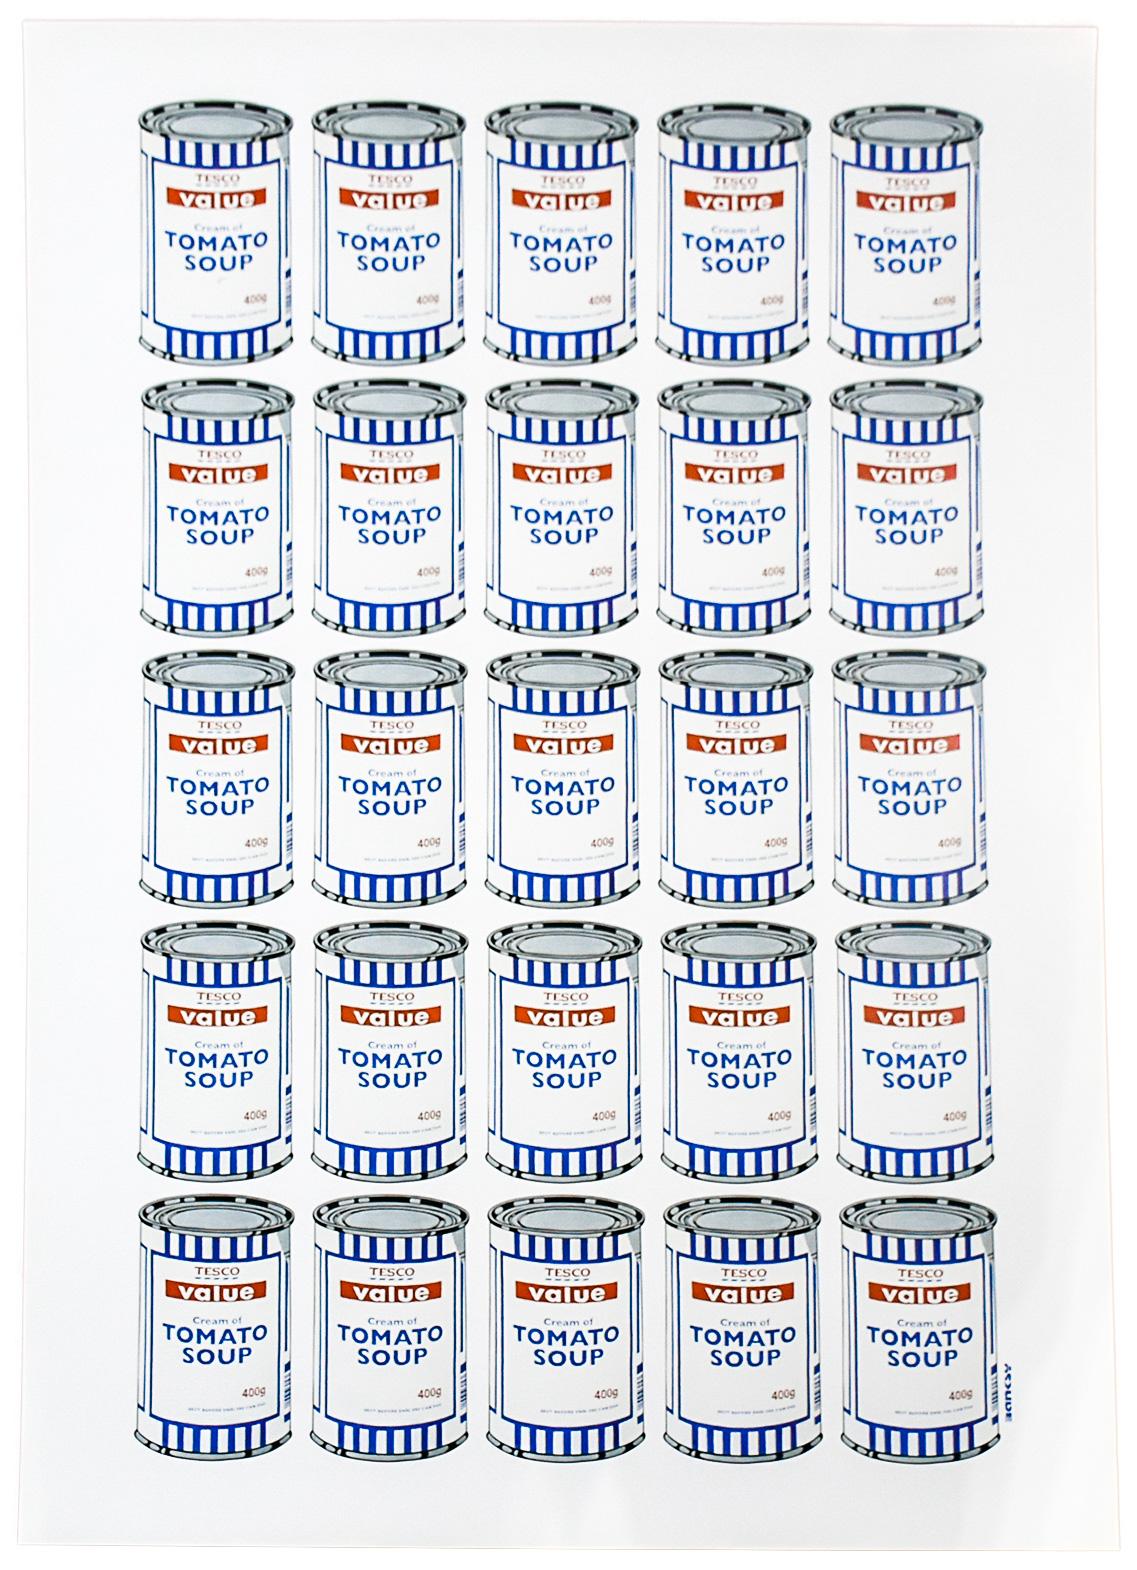 BANKSY Soup Cans - Print by Banksy